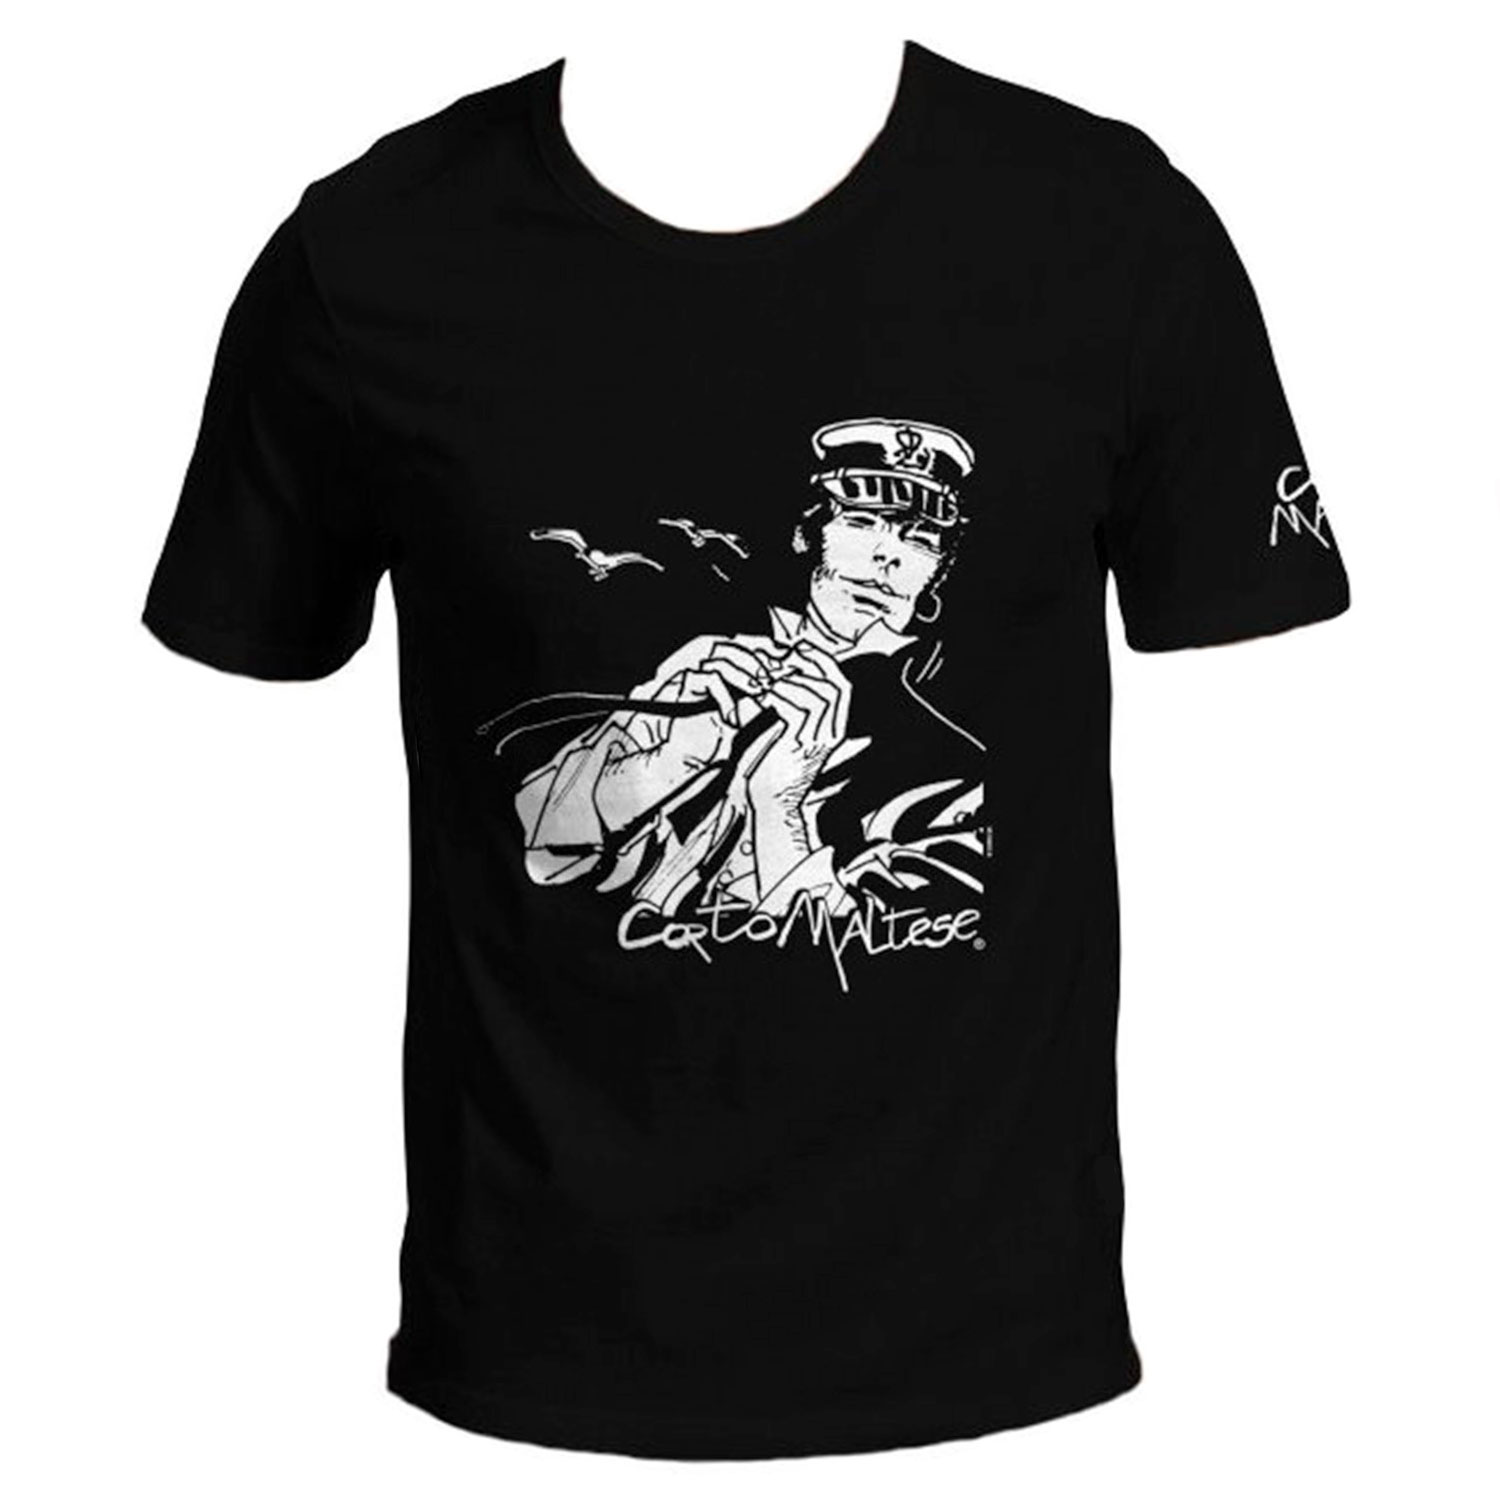 Hugo Pratt T-shirt : Corto Maltese in the wind - Black - Size M